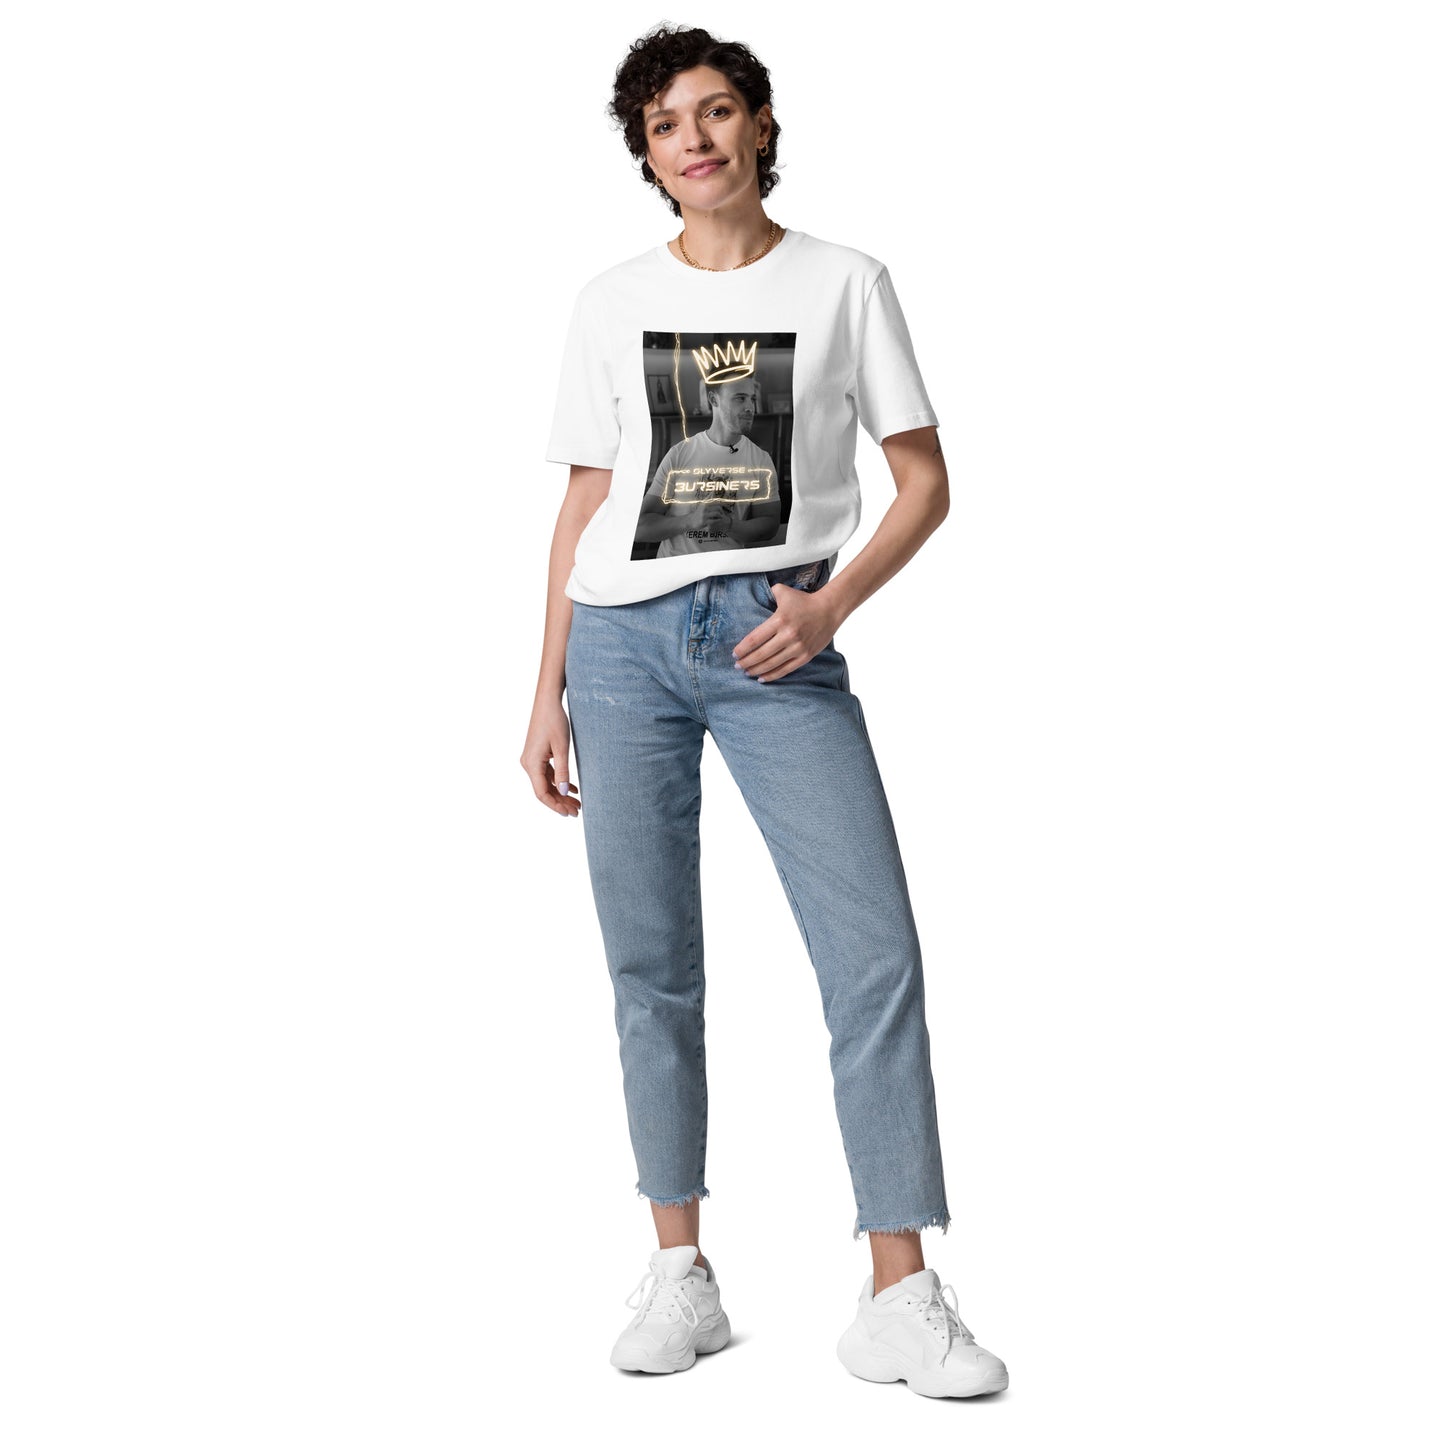 Cotton t-shirt - LA RESISTENCIA Style